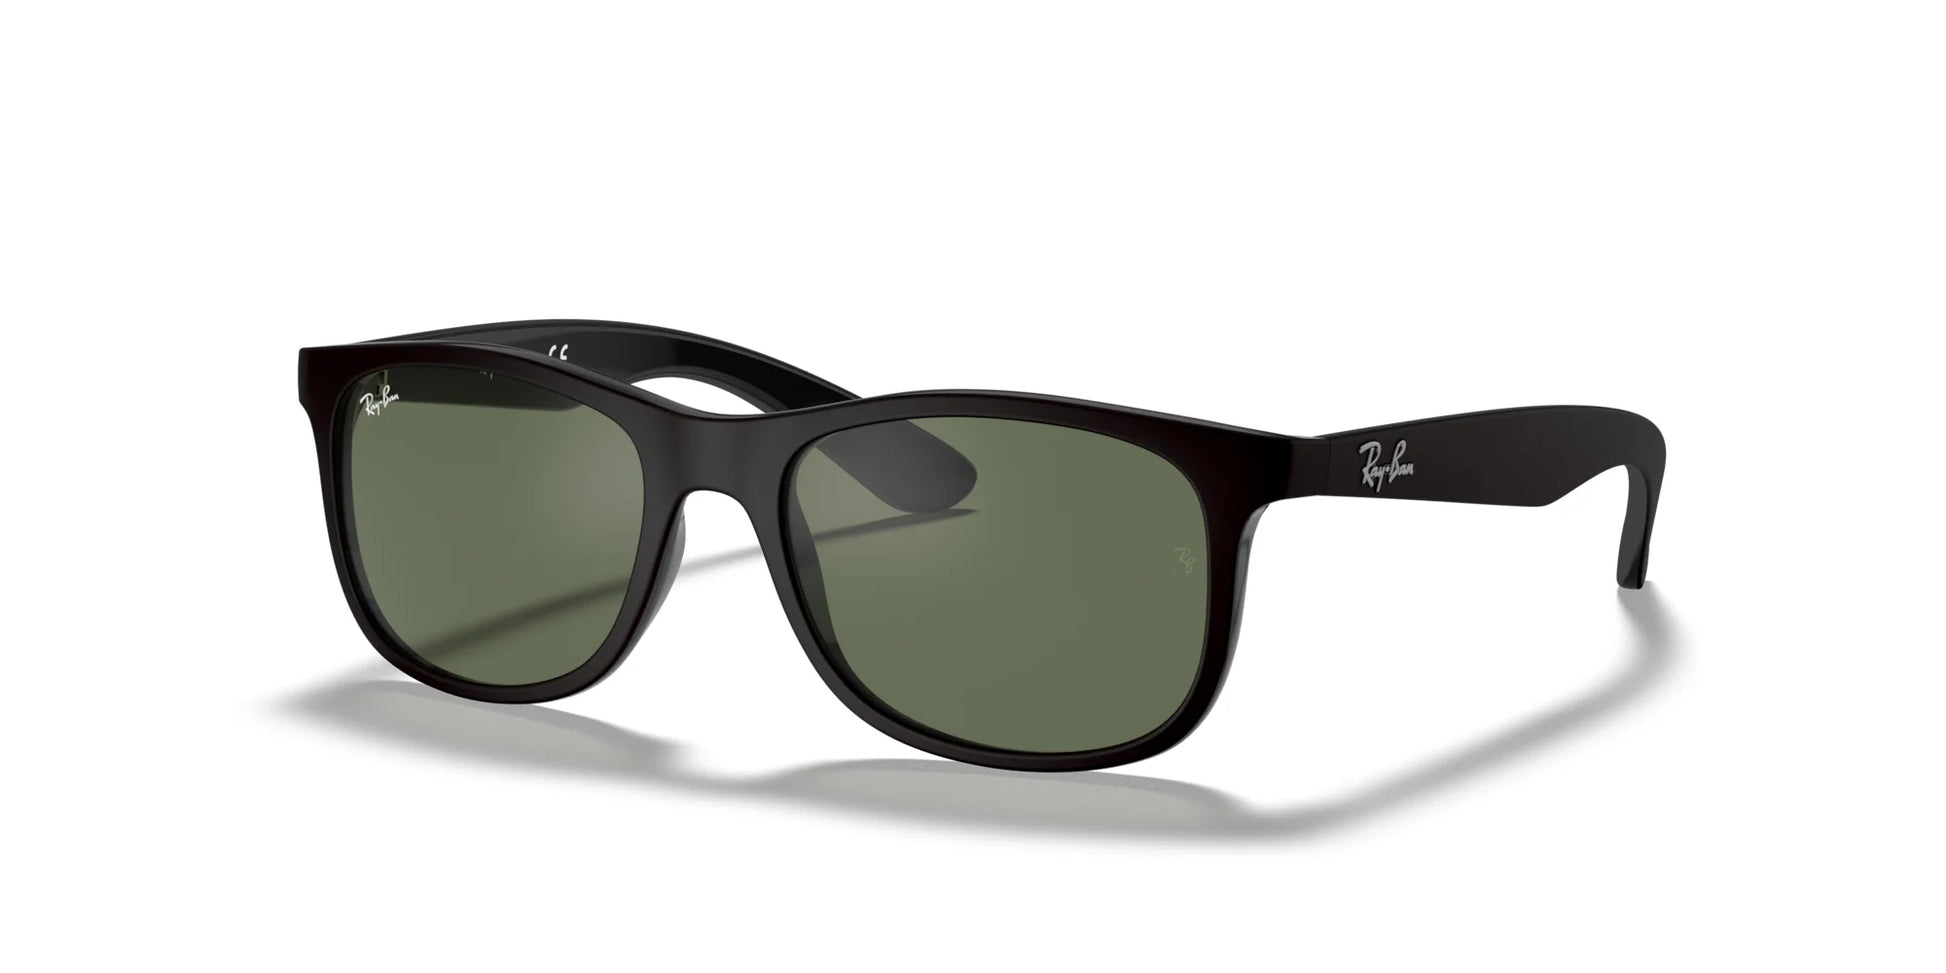 Ray-Ban RJ9062S Sunglasses Black / Dark Green